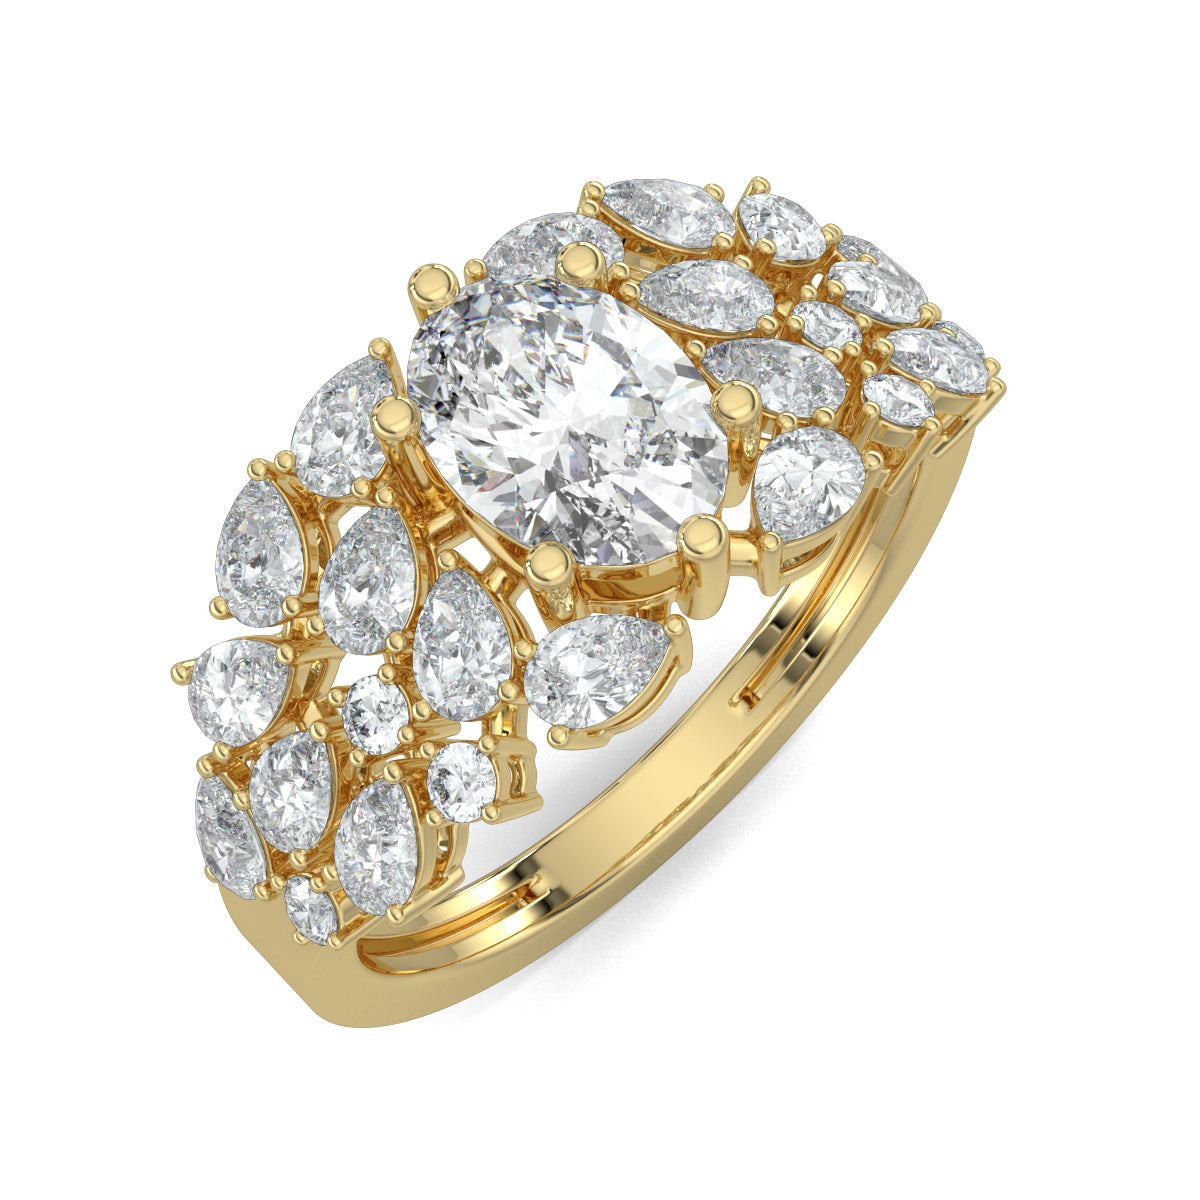 Yellow Gold, Diamond Ring, natural diamond solitaire ring, Lab-grown diamond solitaire ring, Nova Glow Solitaire Ring, oval-cut diamond ring, pear-shaped diamonds, round diamonds, celestial jewelry, classic band, elegant adornment